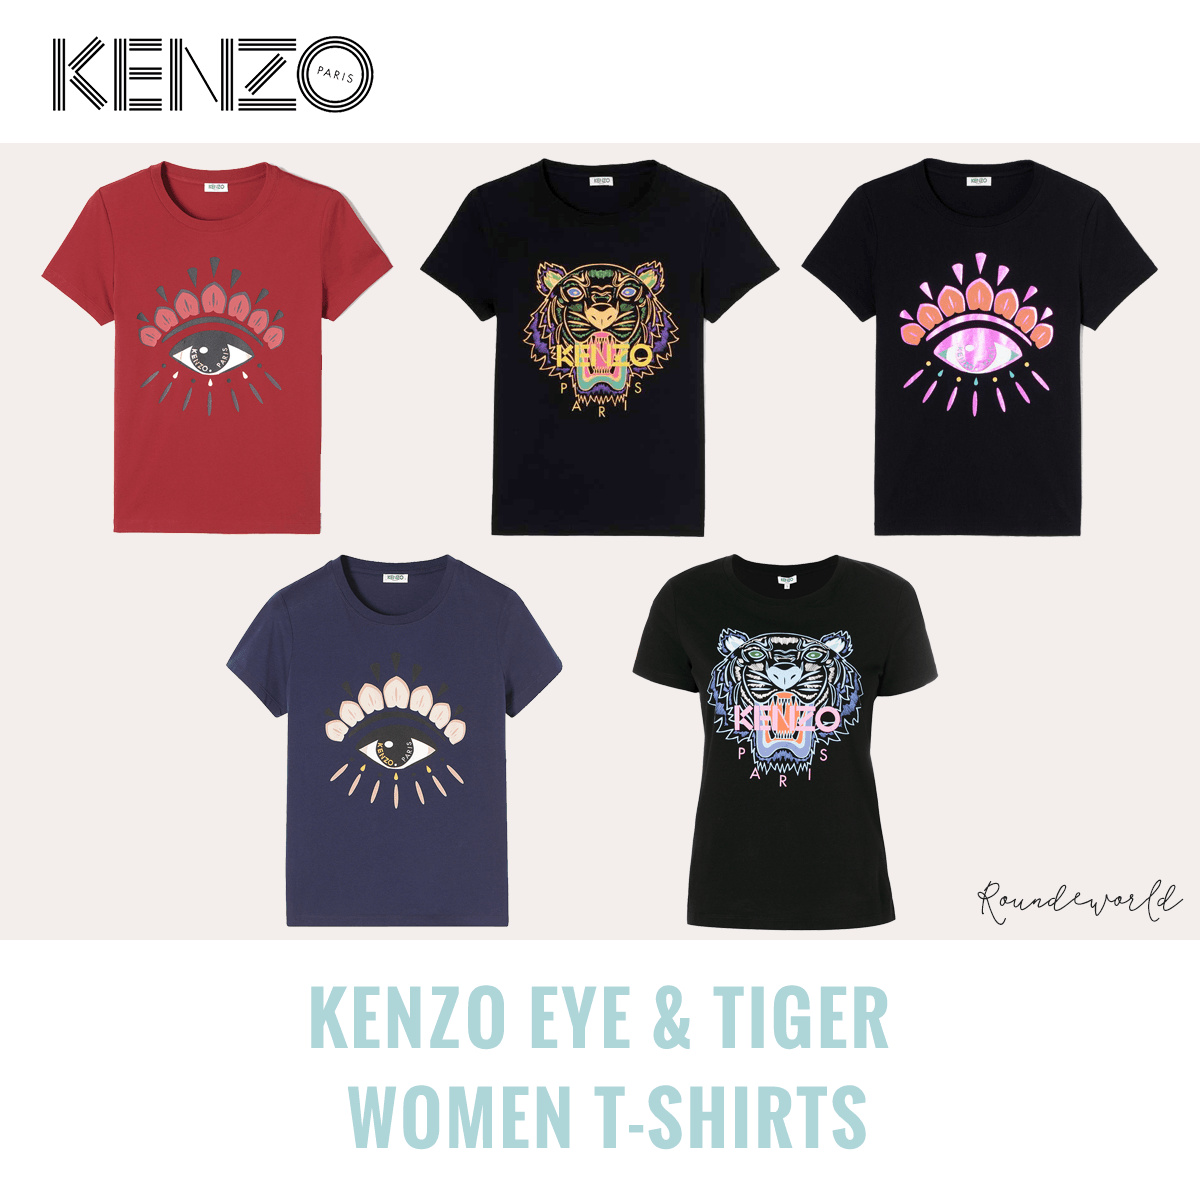 kenzo women's clothing